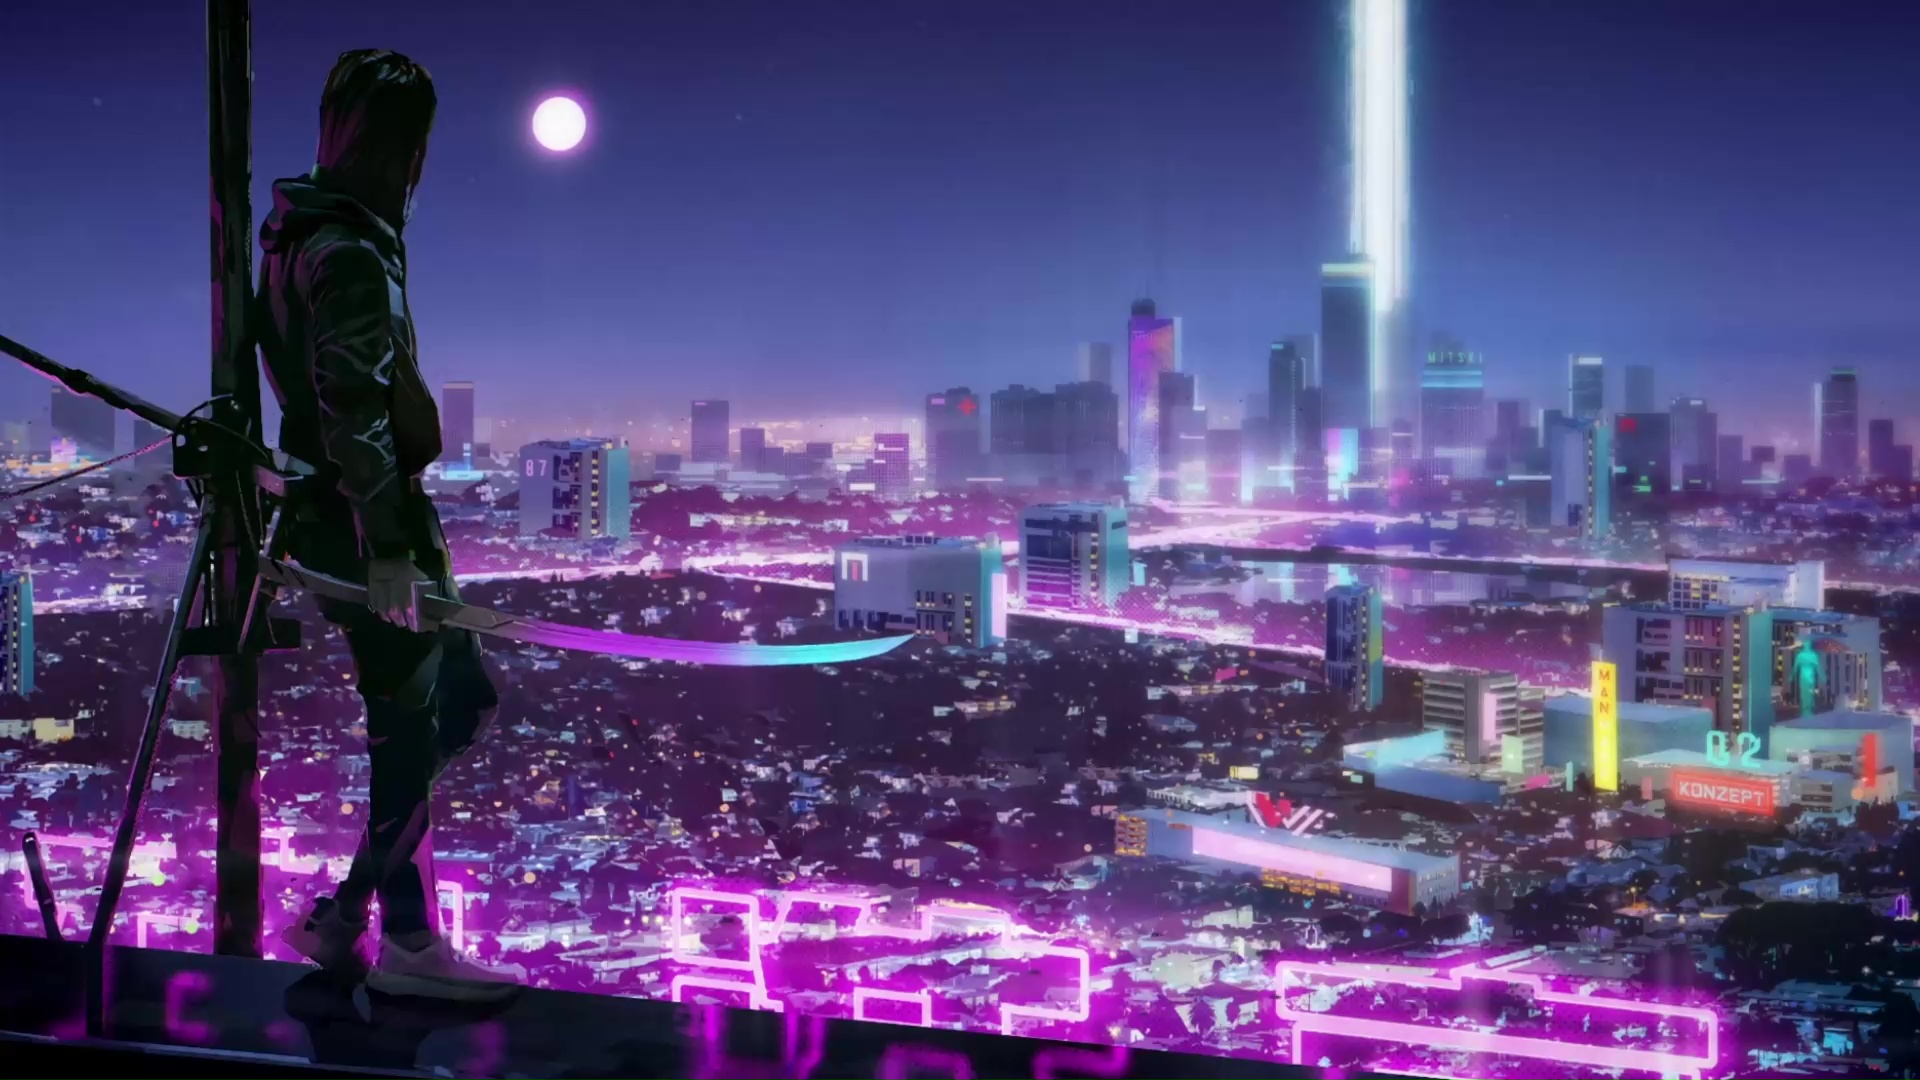 Cyberpunk Neon Lights Night City - Live Desktop Wallpapers